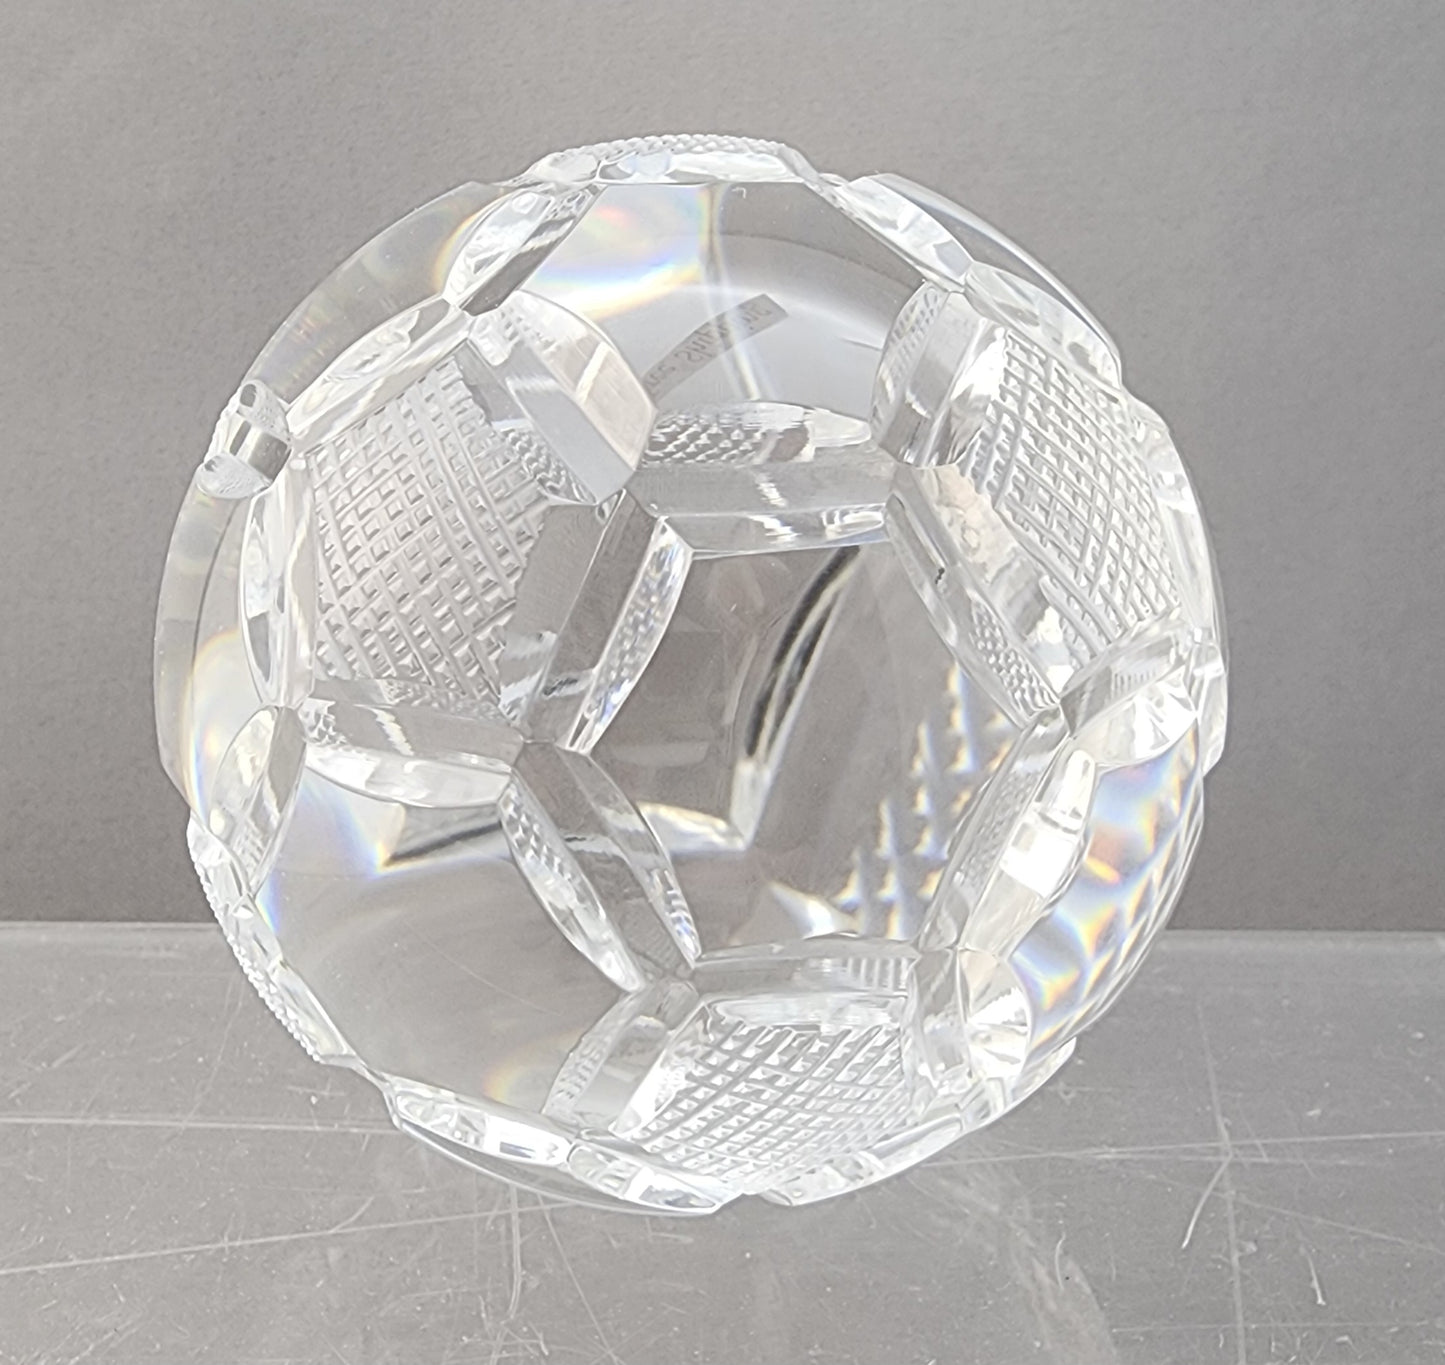 Crystal soccer ball